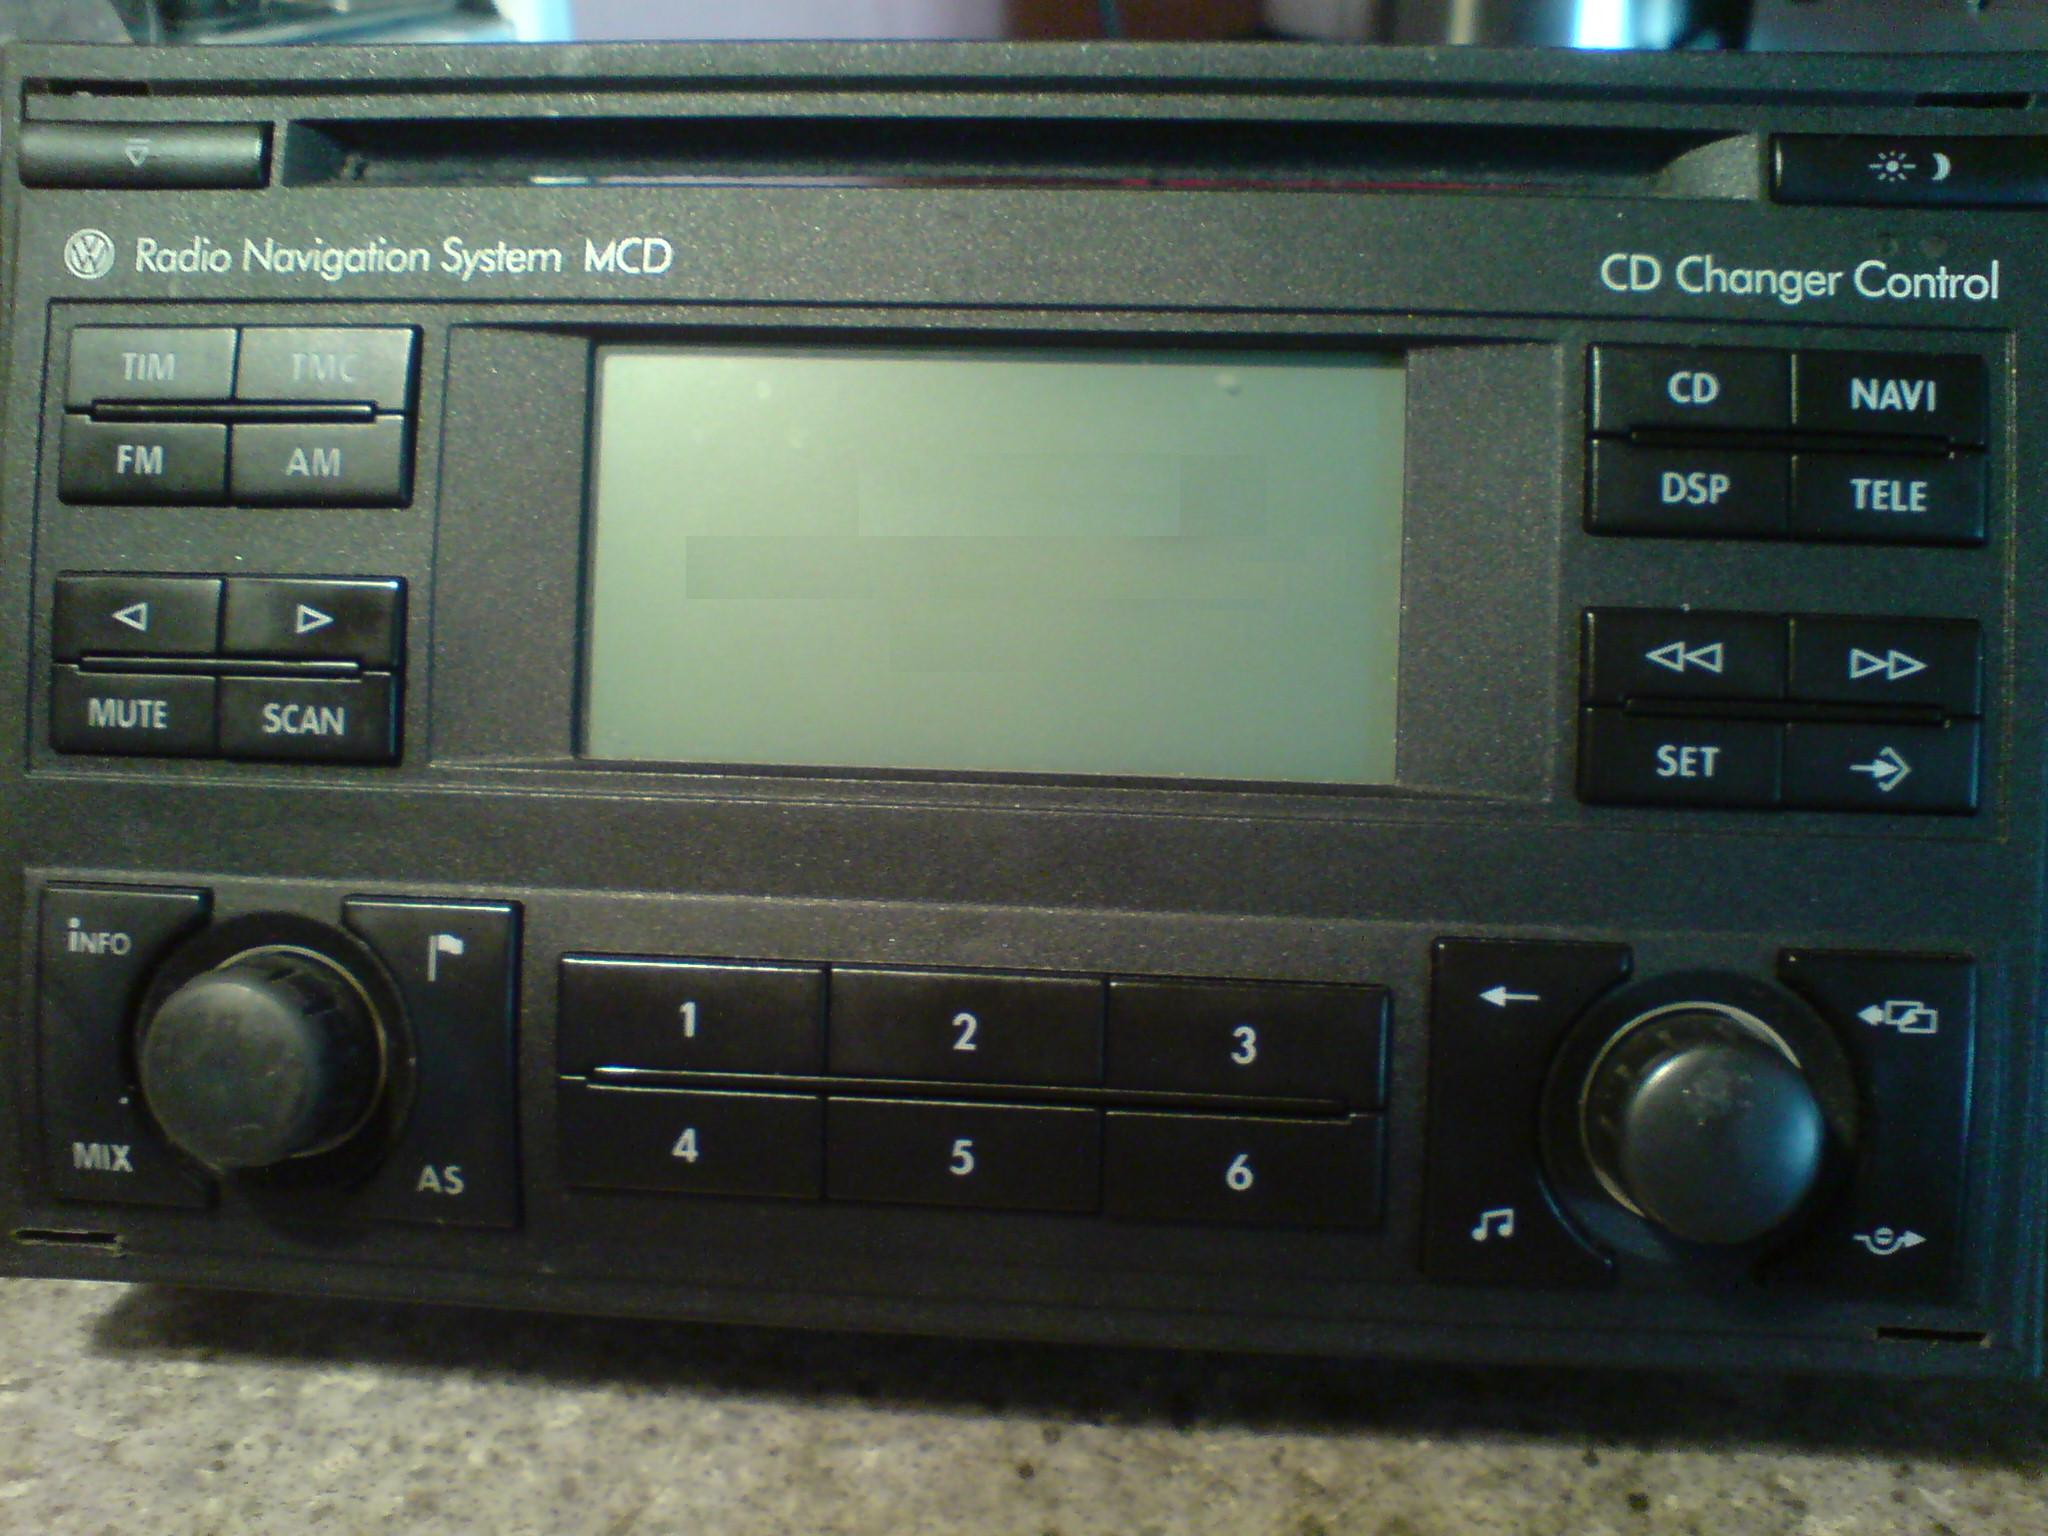 Radio Navigation System MCD VW Lupo jak rozkodować?